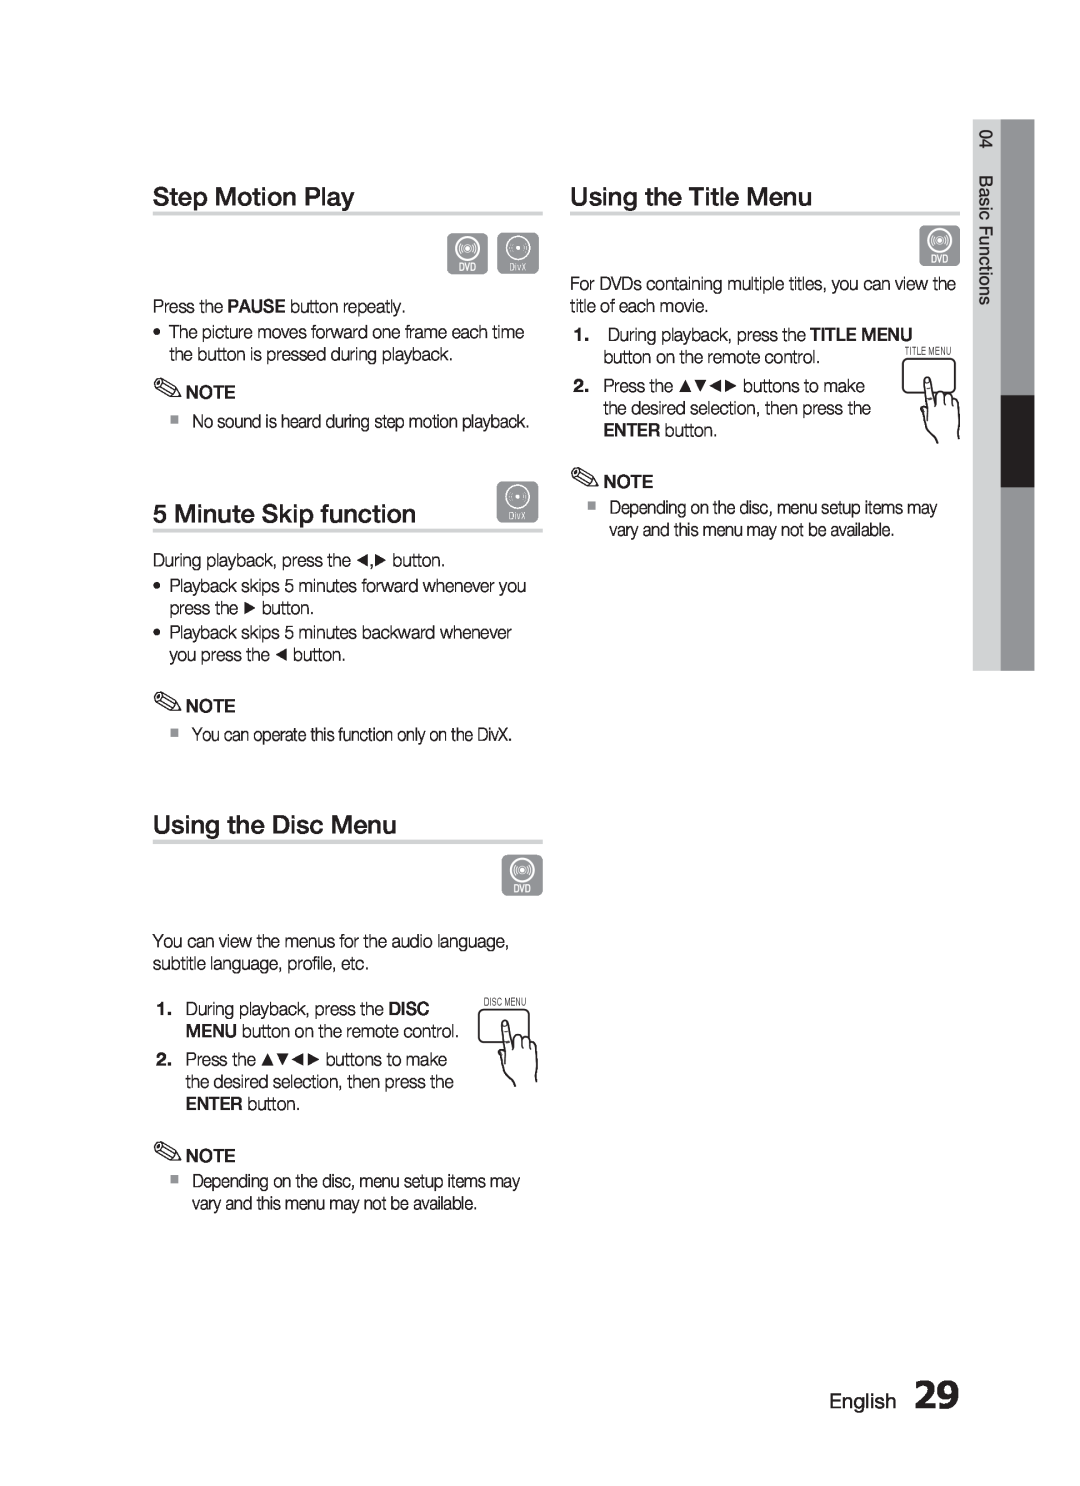 Samsung HT-C445N/HAC manual Step Motion Play, Minute Skip function, Using the Title Menu, Using the Disc Menu, English 